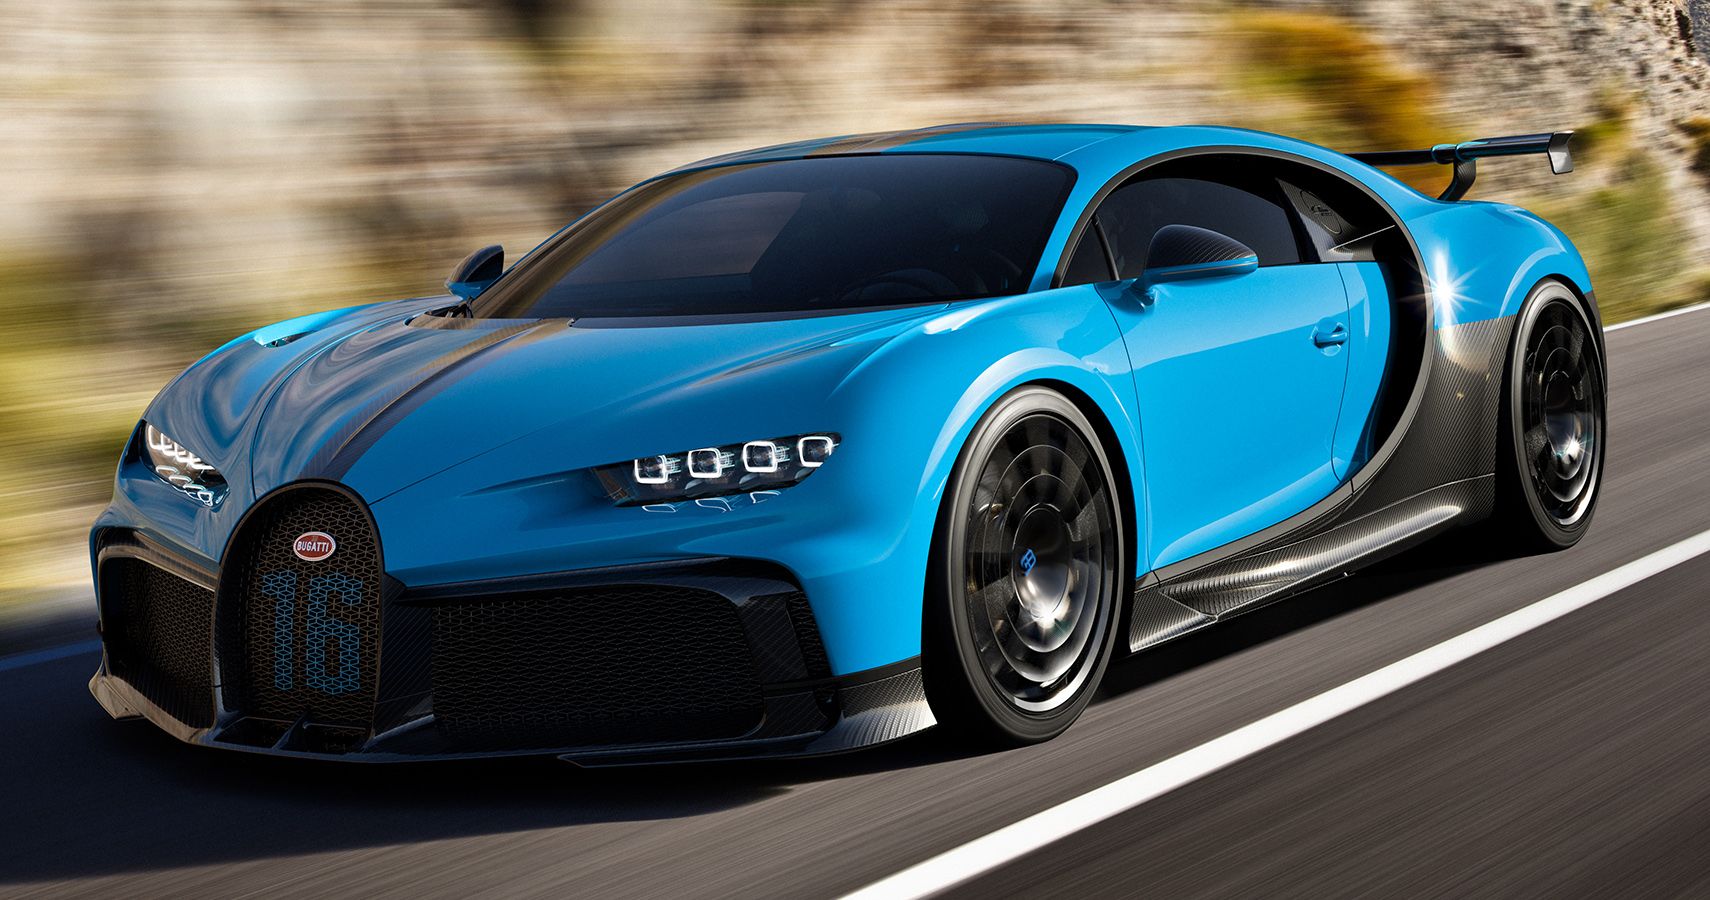 Blue Bugatti Chiron Pur Sport